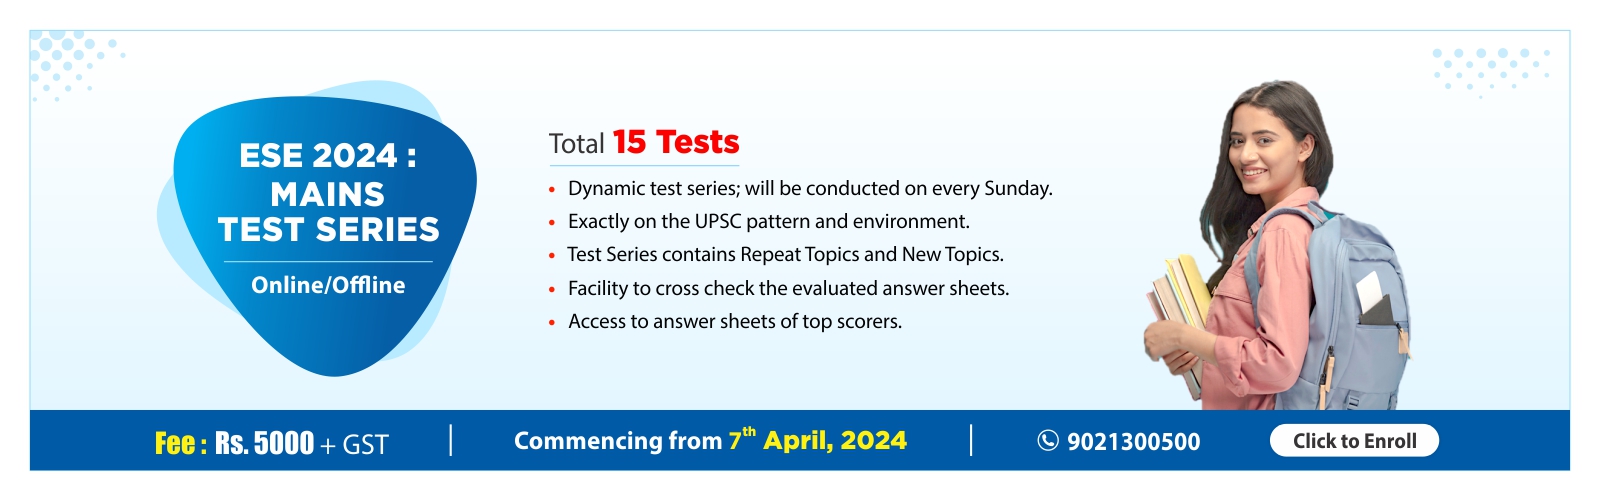 ESE 2024 Mains Test Series